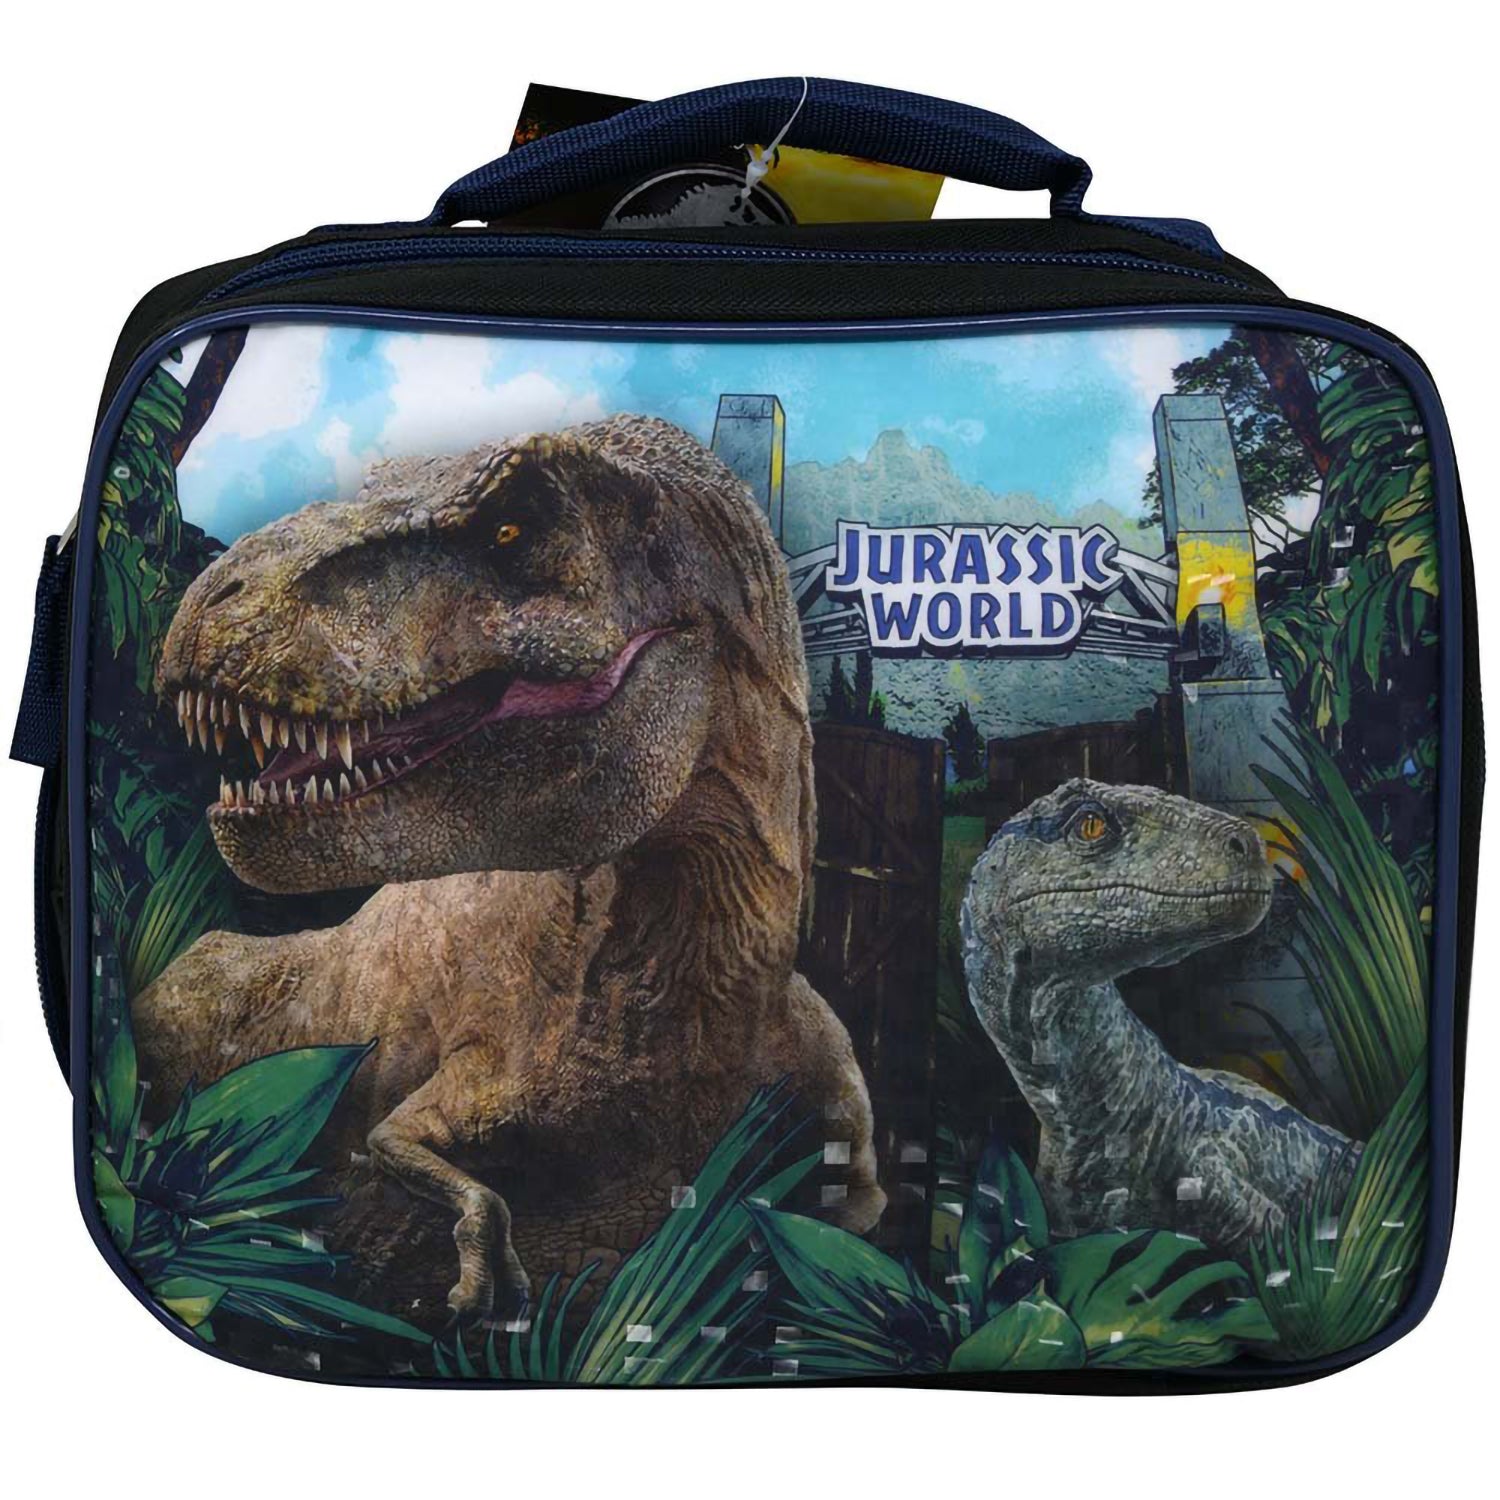 Jurassic World Insulated Lunch Bag